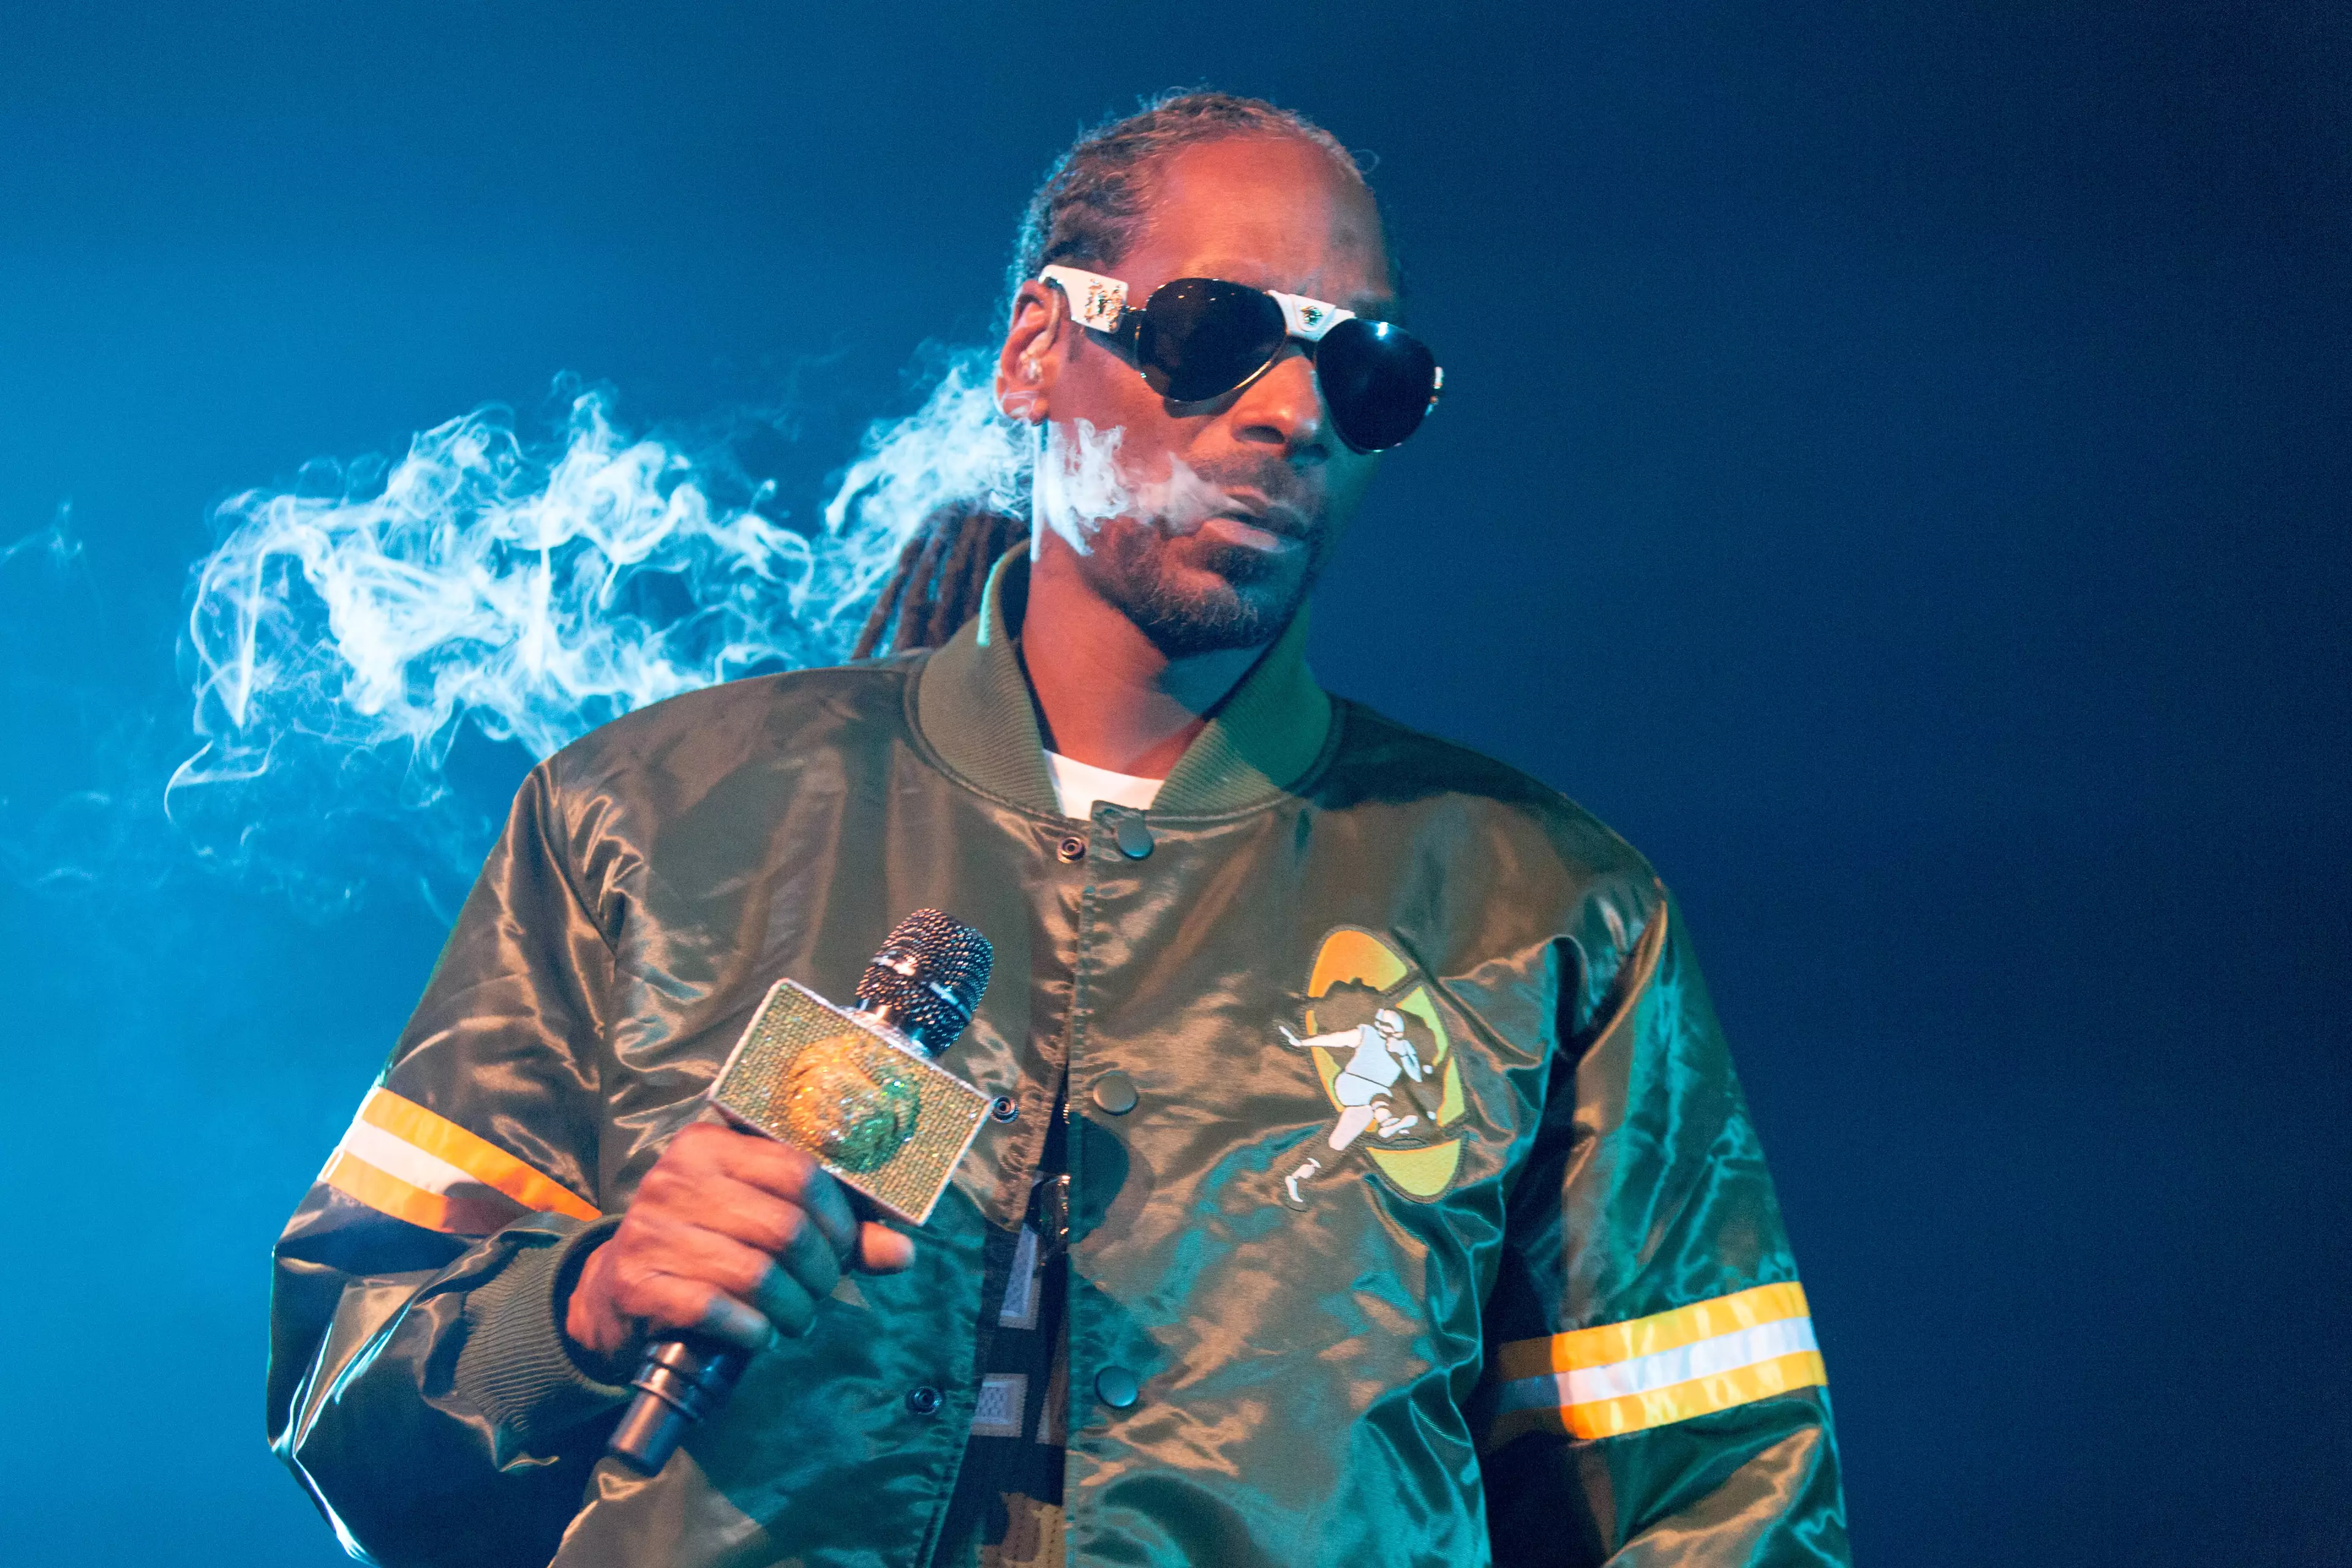 Snoop's been living a 'simple' lifestyle in lockdown.